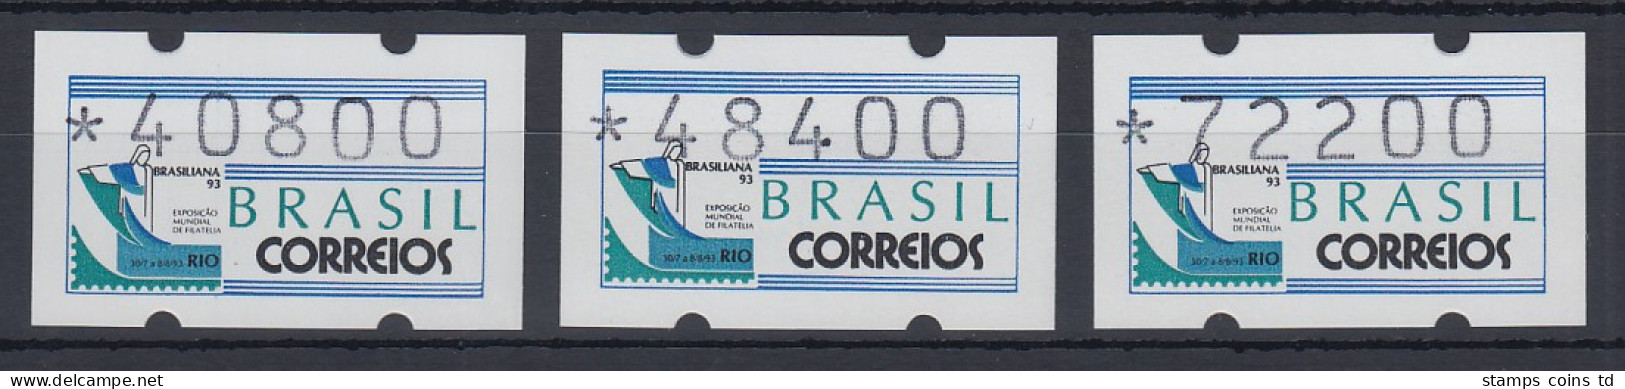 Brasilien Klüssendorf-ATM 1993 BRASILIANA Mi-Nr 5 Satz 40800 - 48400 - 72200 ** - Frankeervignetten (Frama)